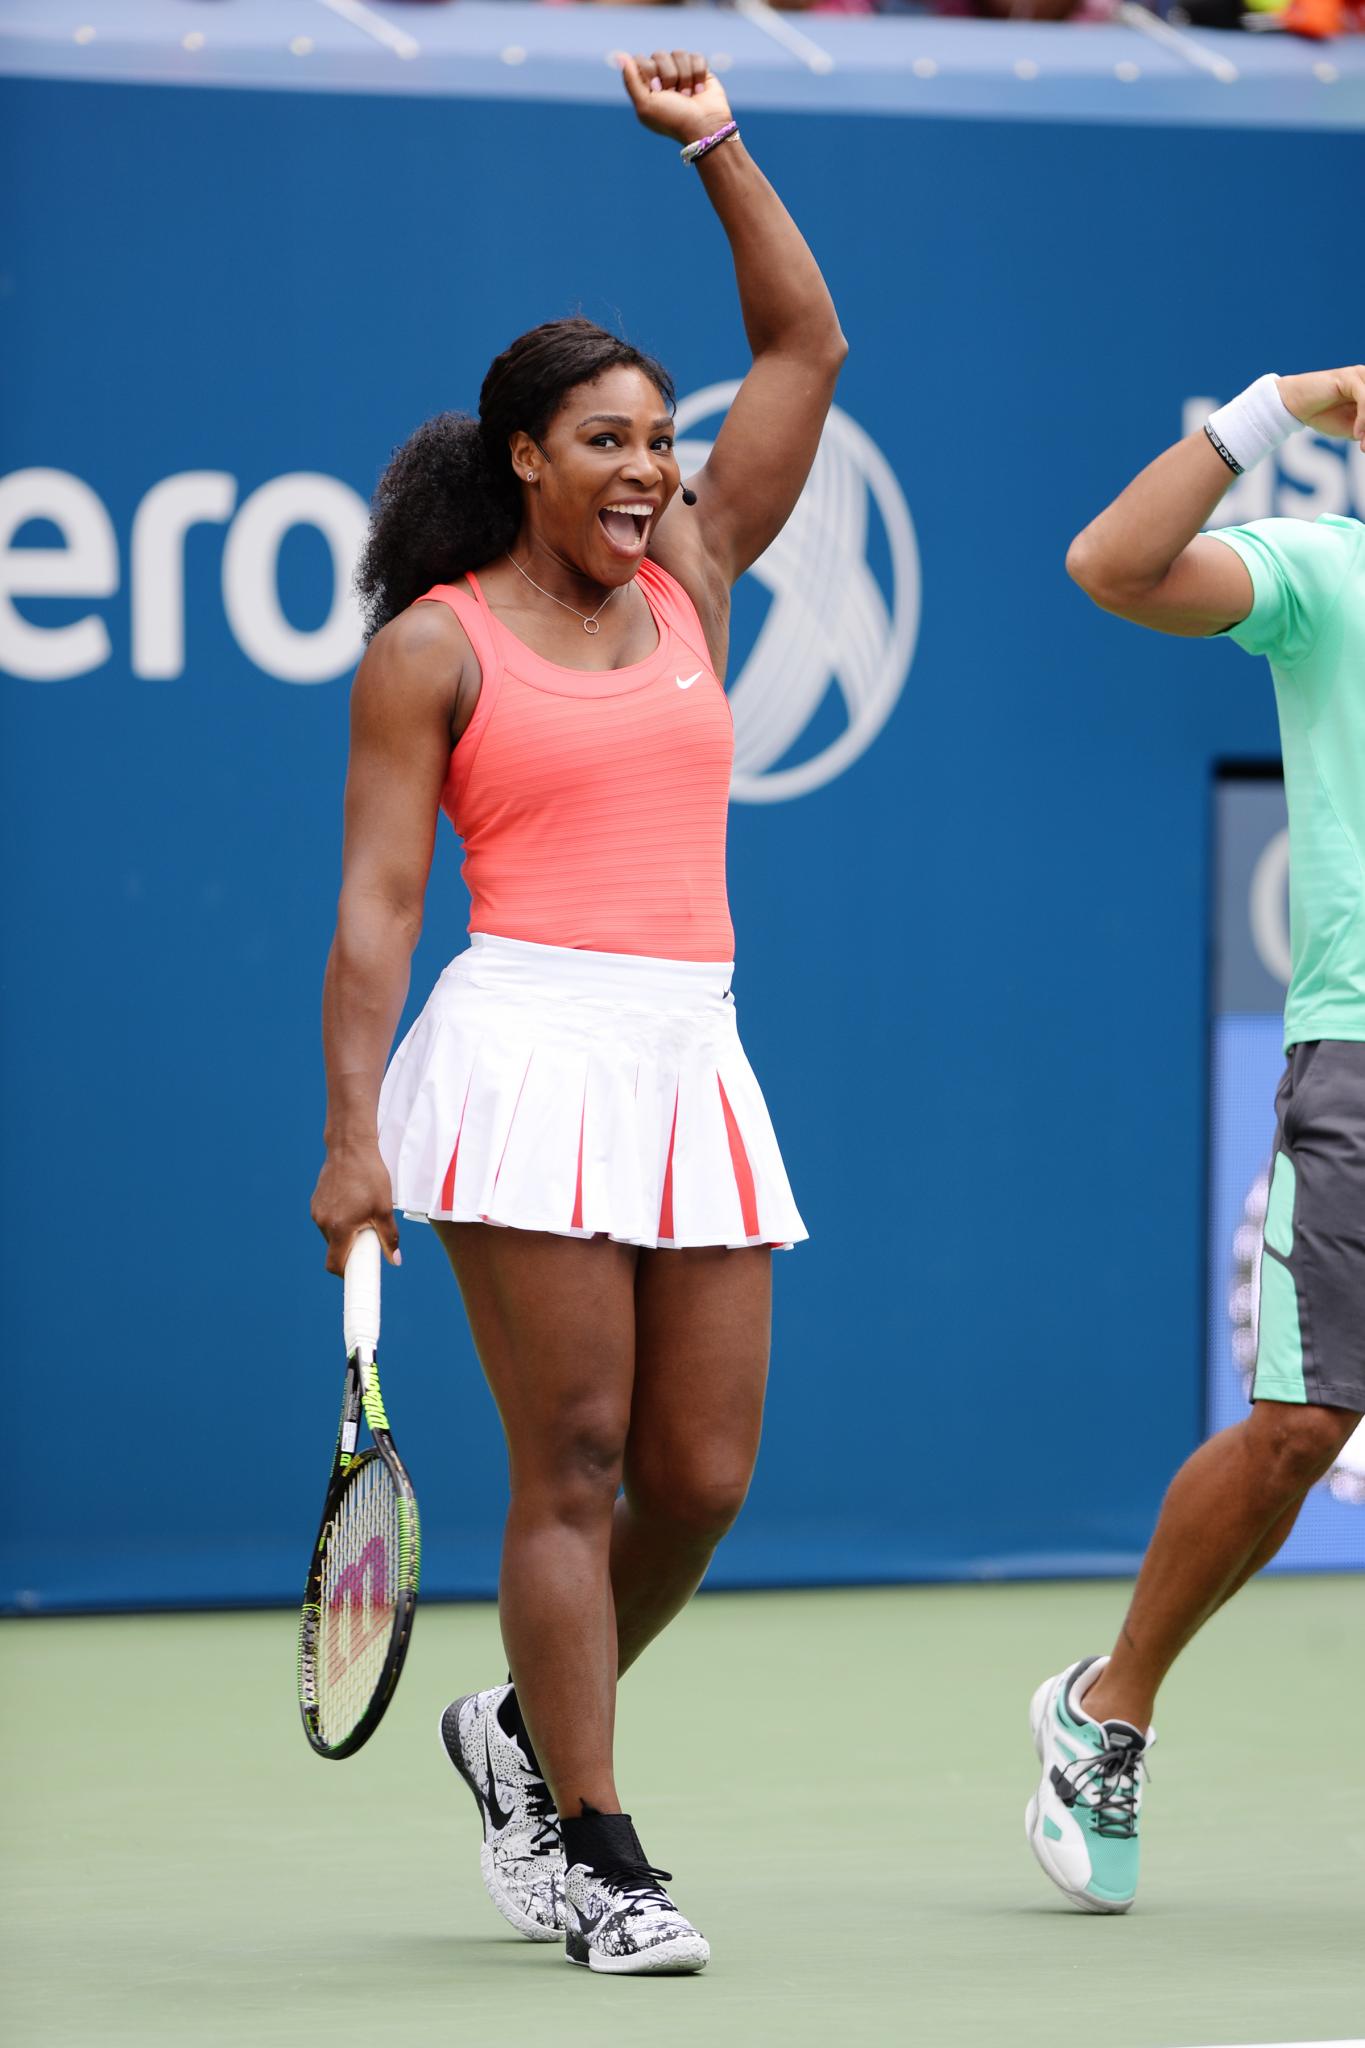 Serena Williams Advances to Second Round of U.S. Open